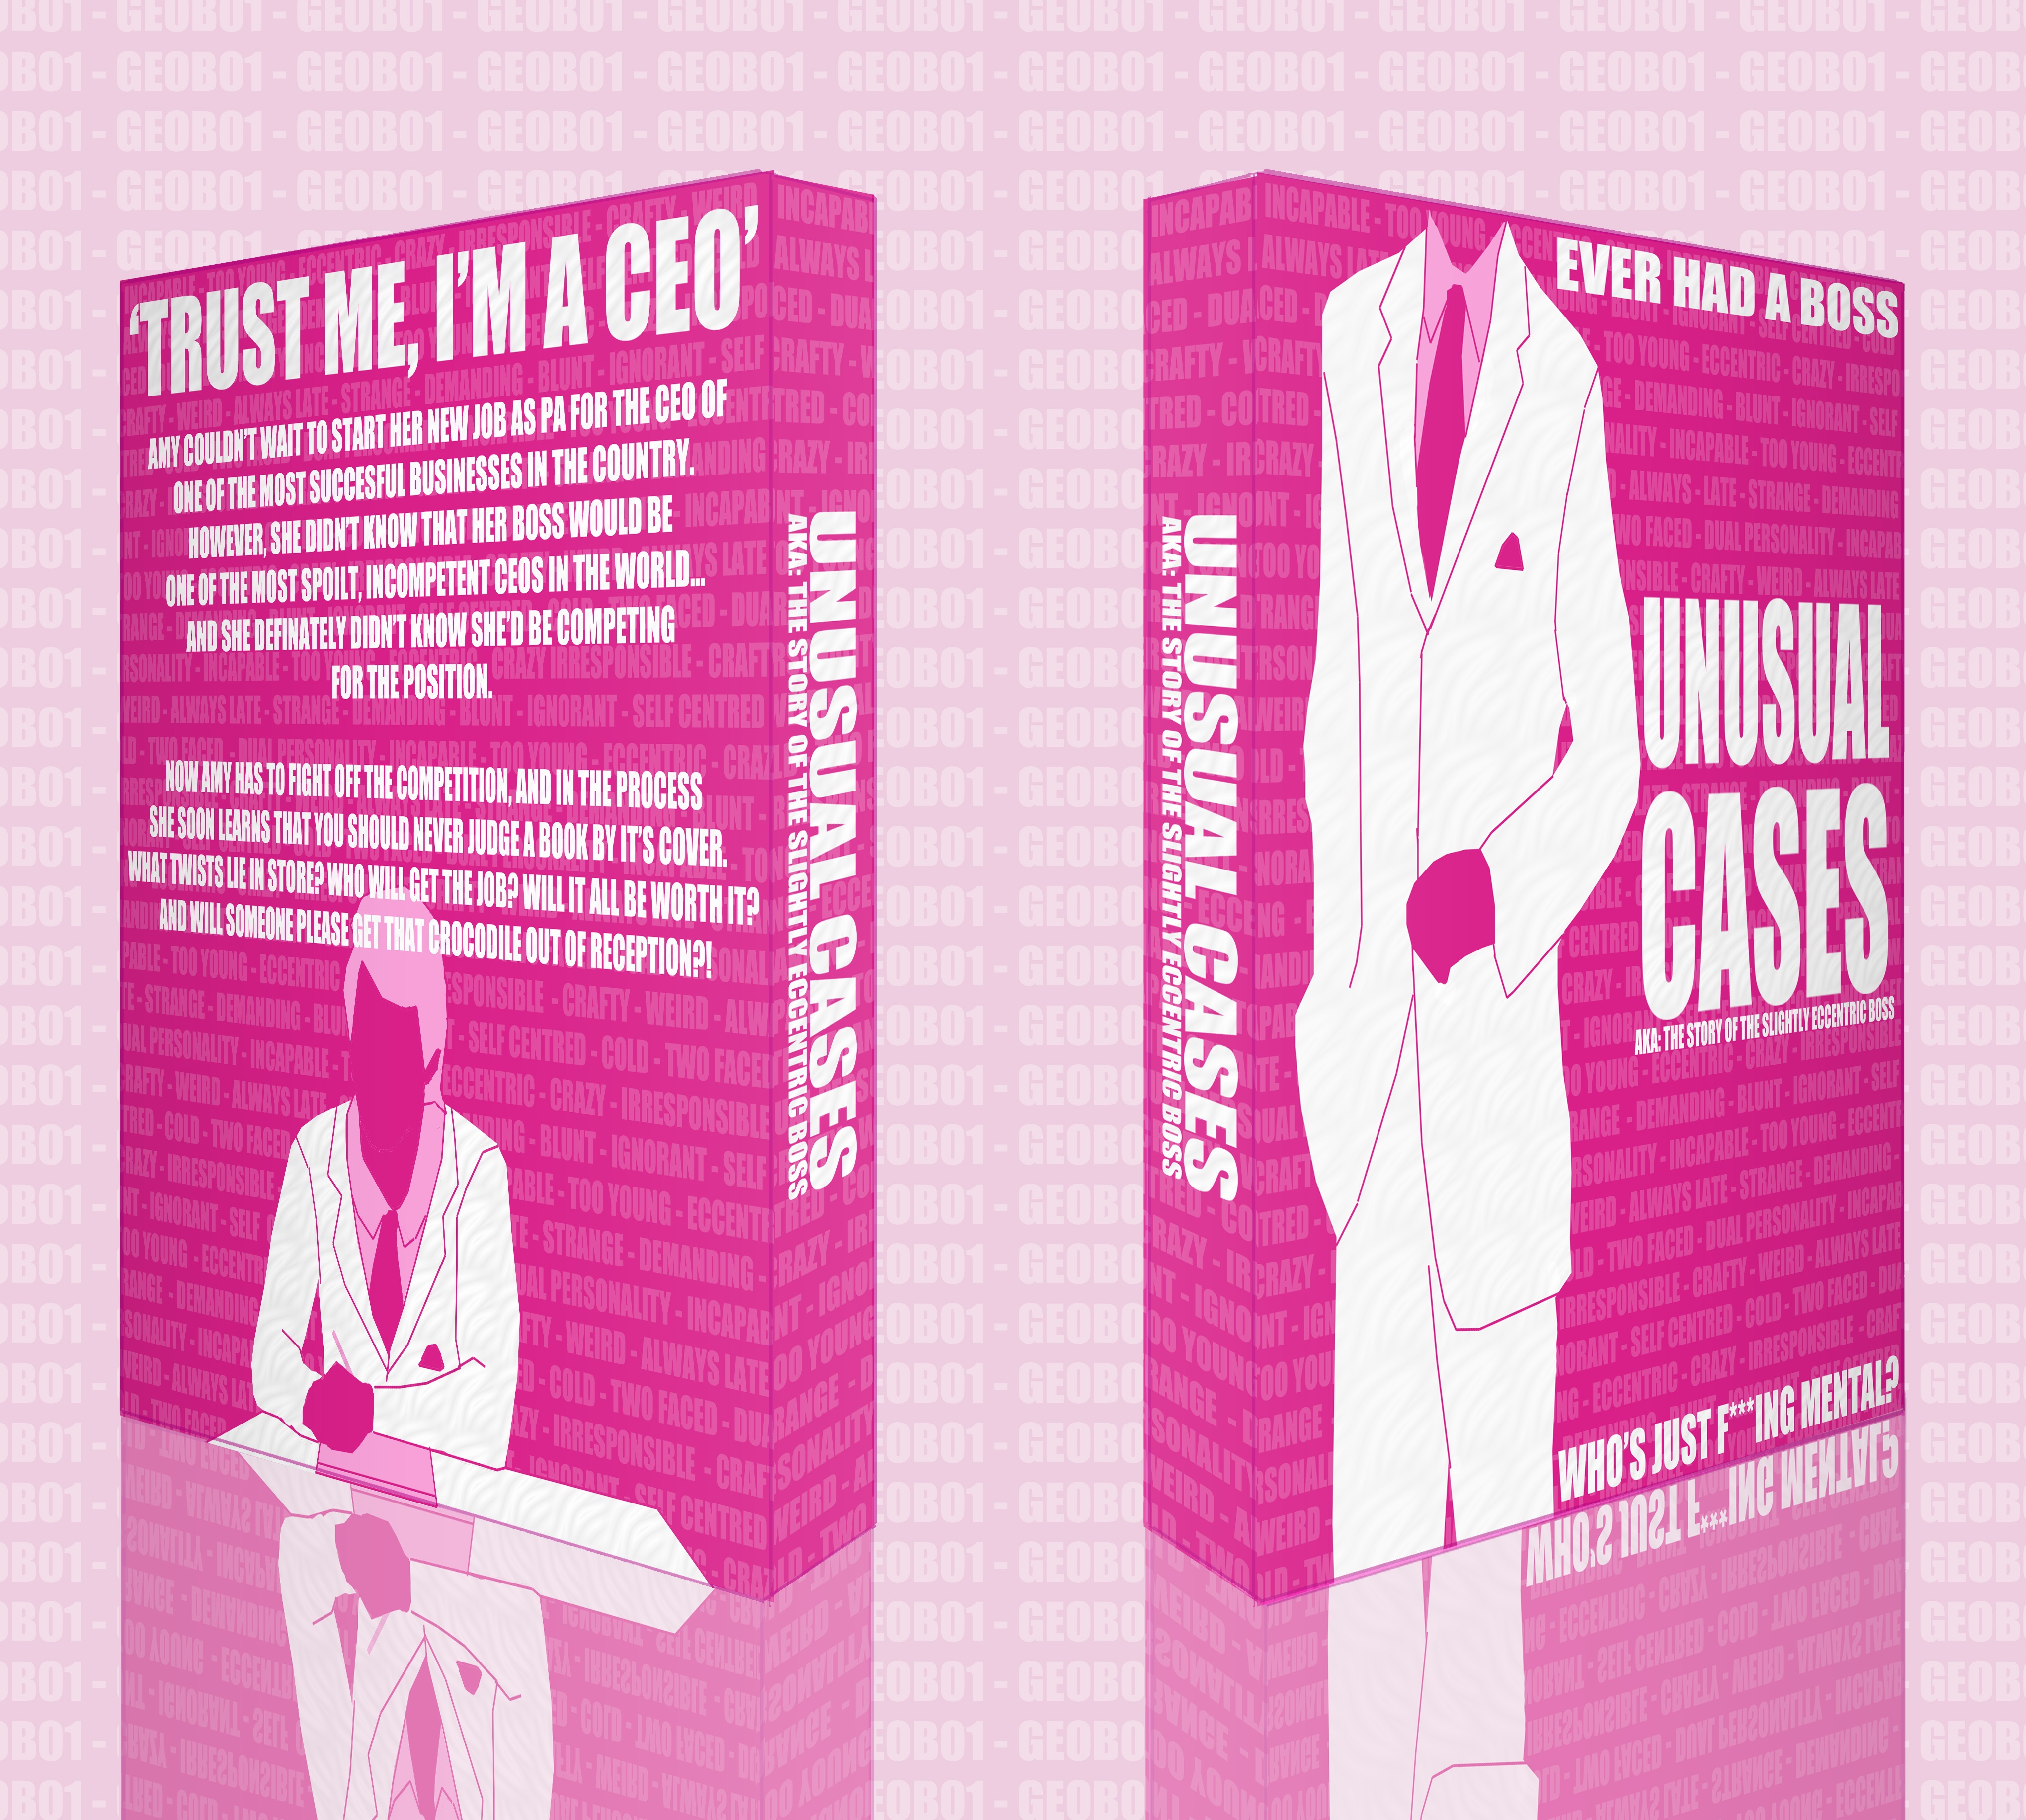 Unusual Cases box cover